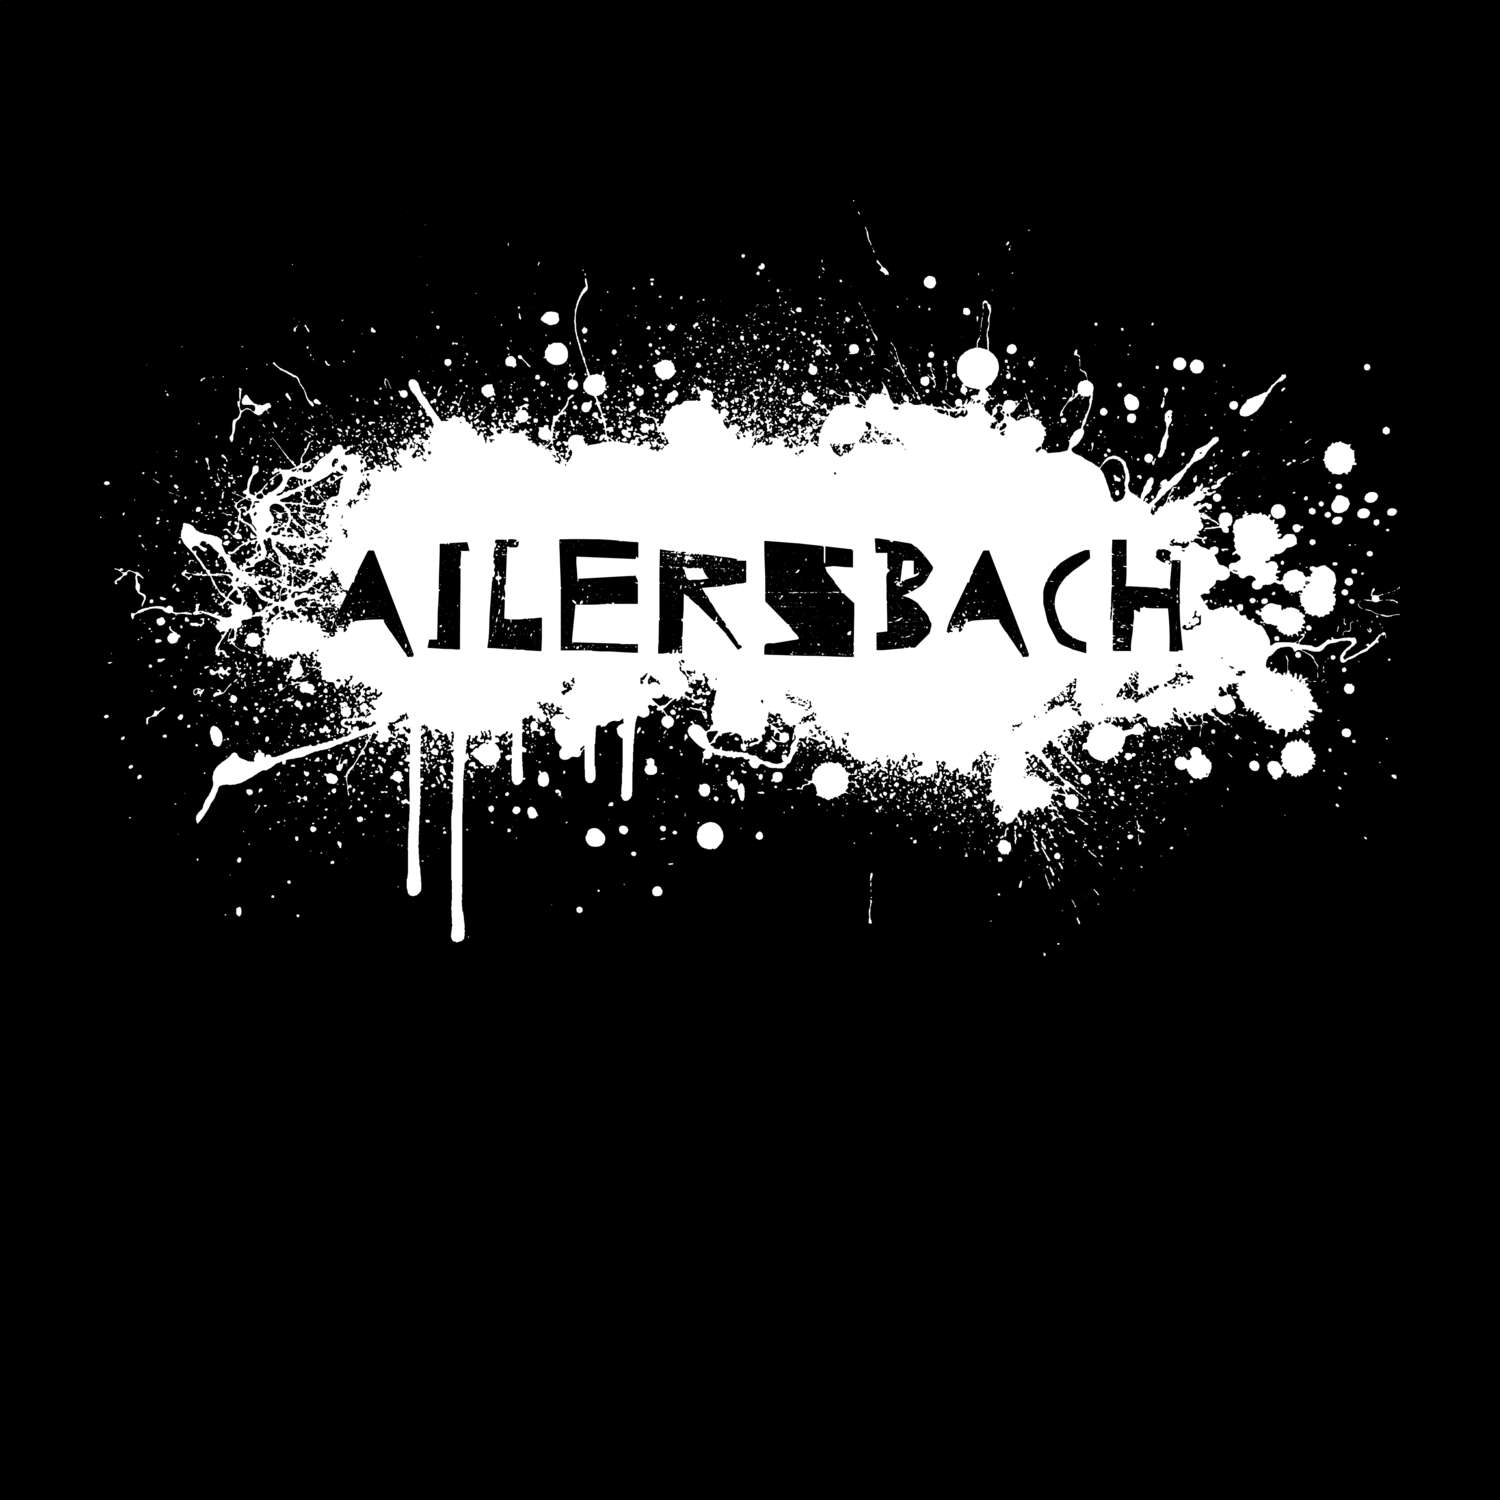 Ailersbach T-Shirt »Paint Splash Punk«